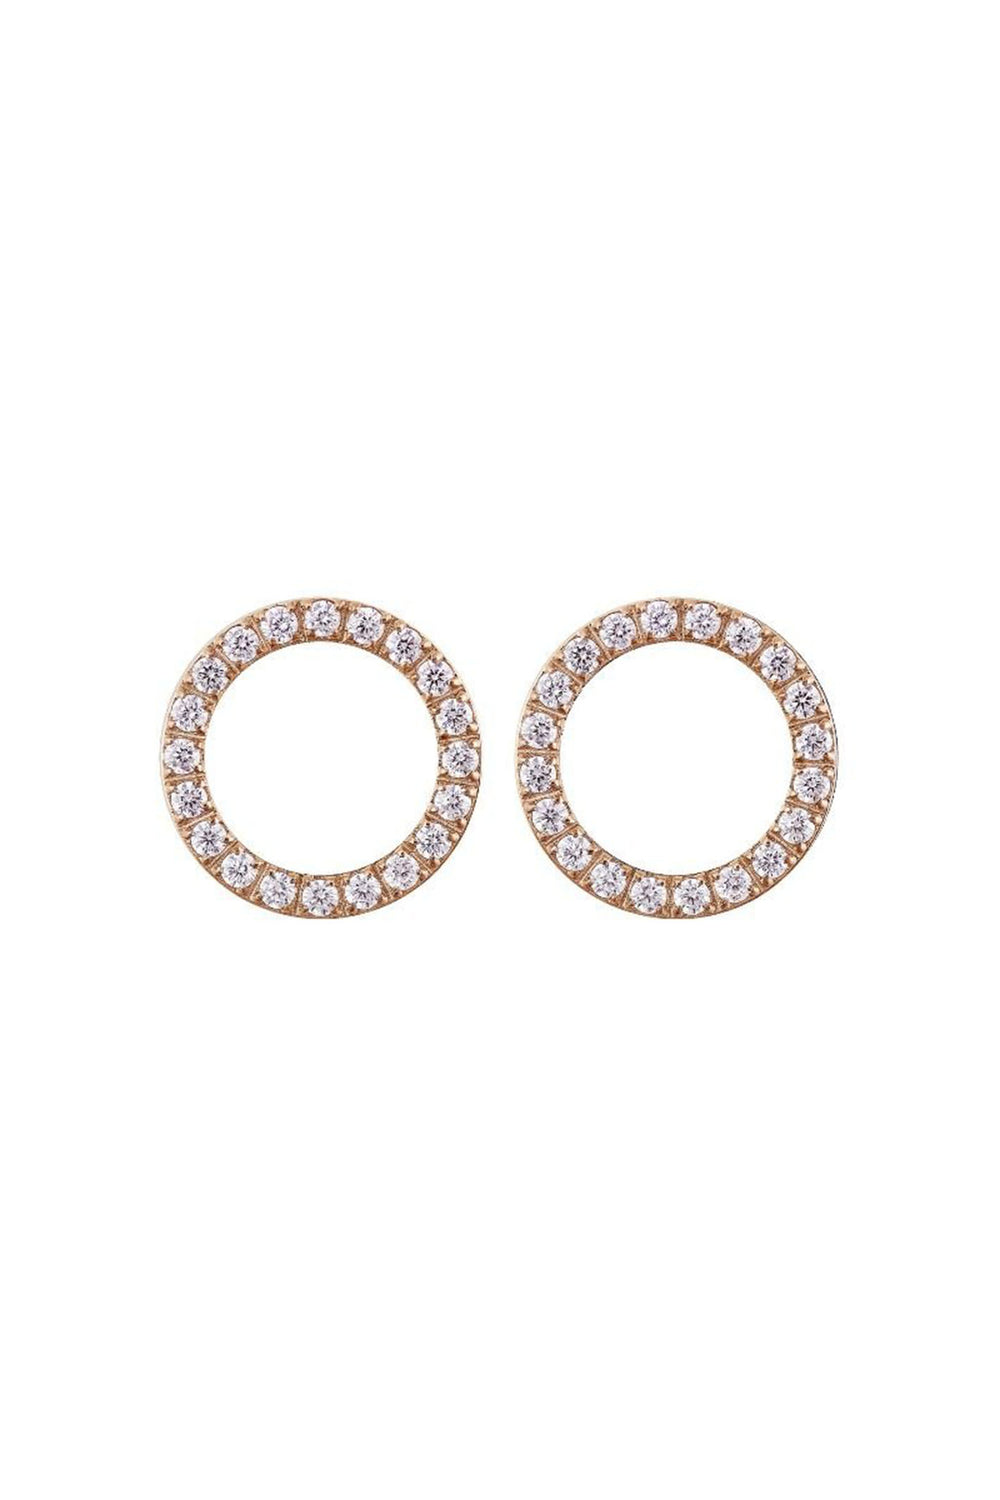 Edblad 121094 Glow Gold Stud Earrings - Olivia Grace Fashion